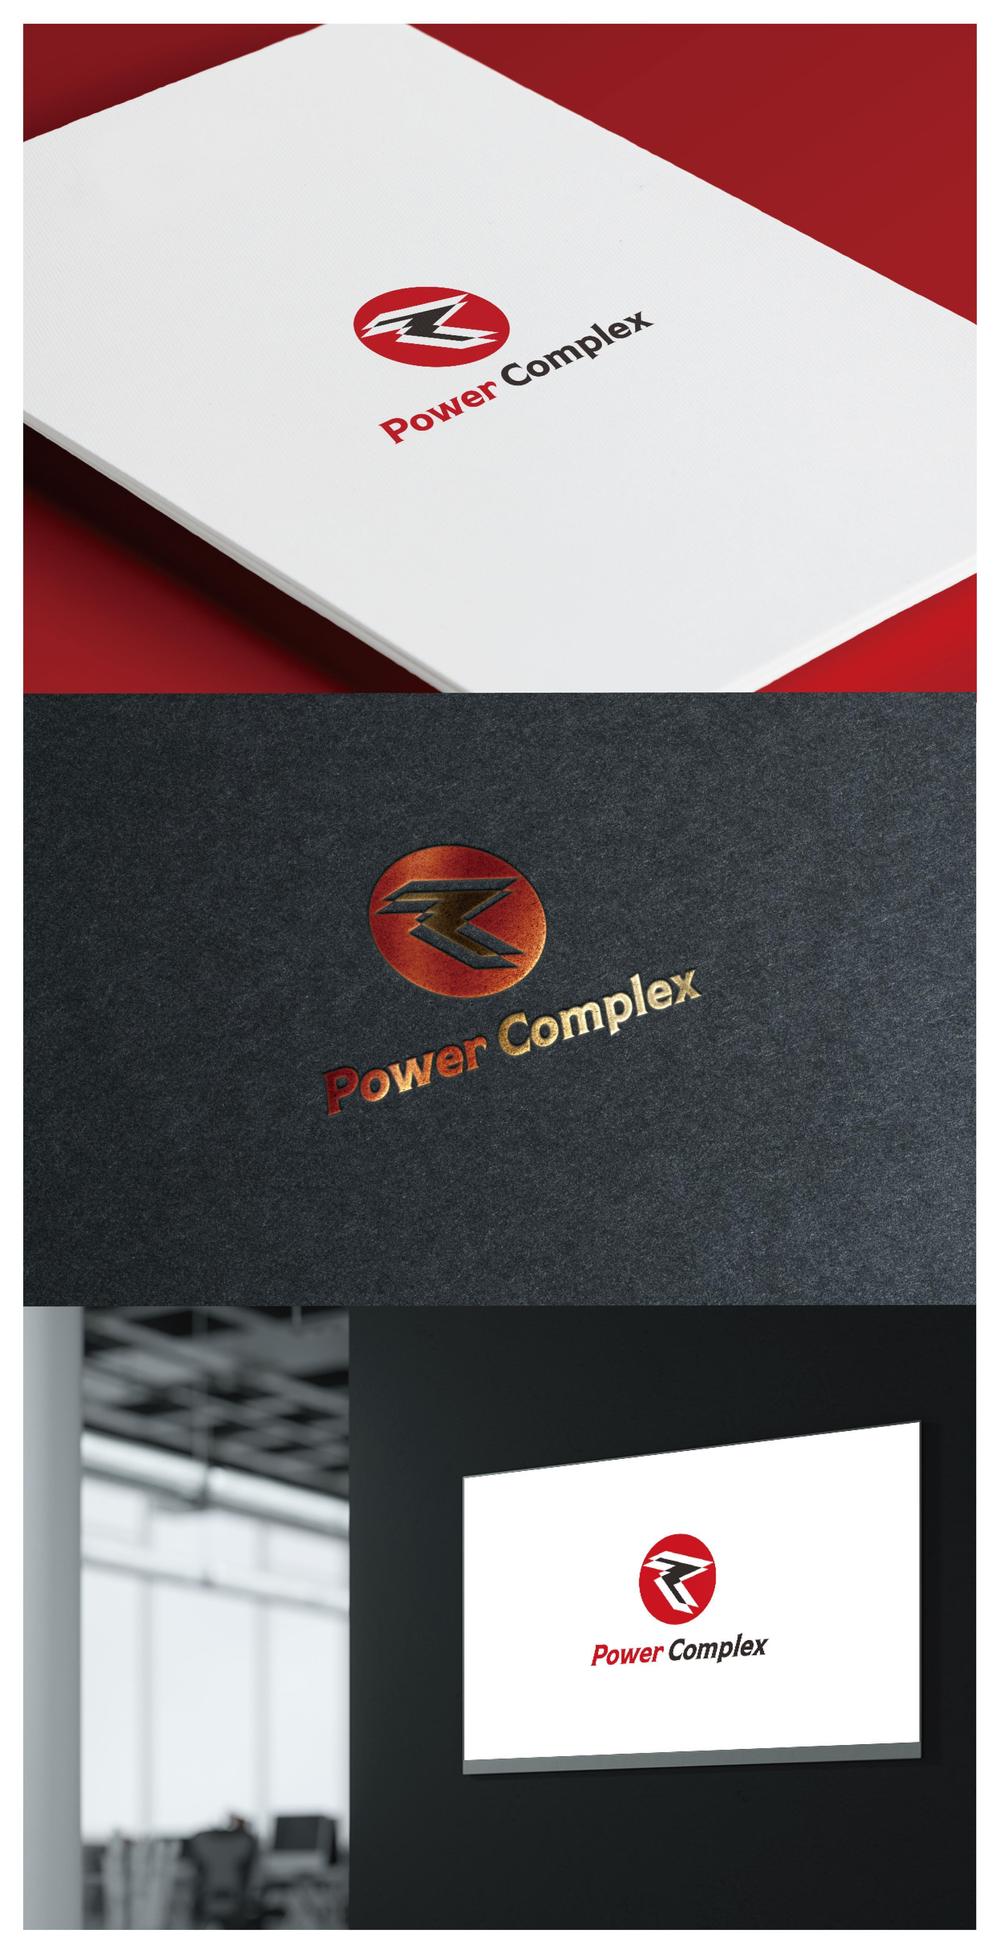 Power Complex_logo02_01.jpg